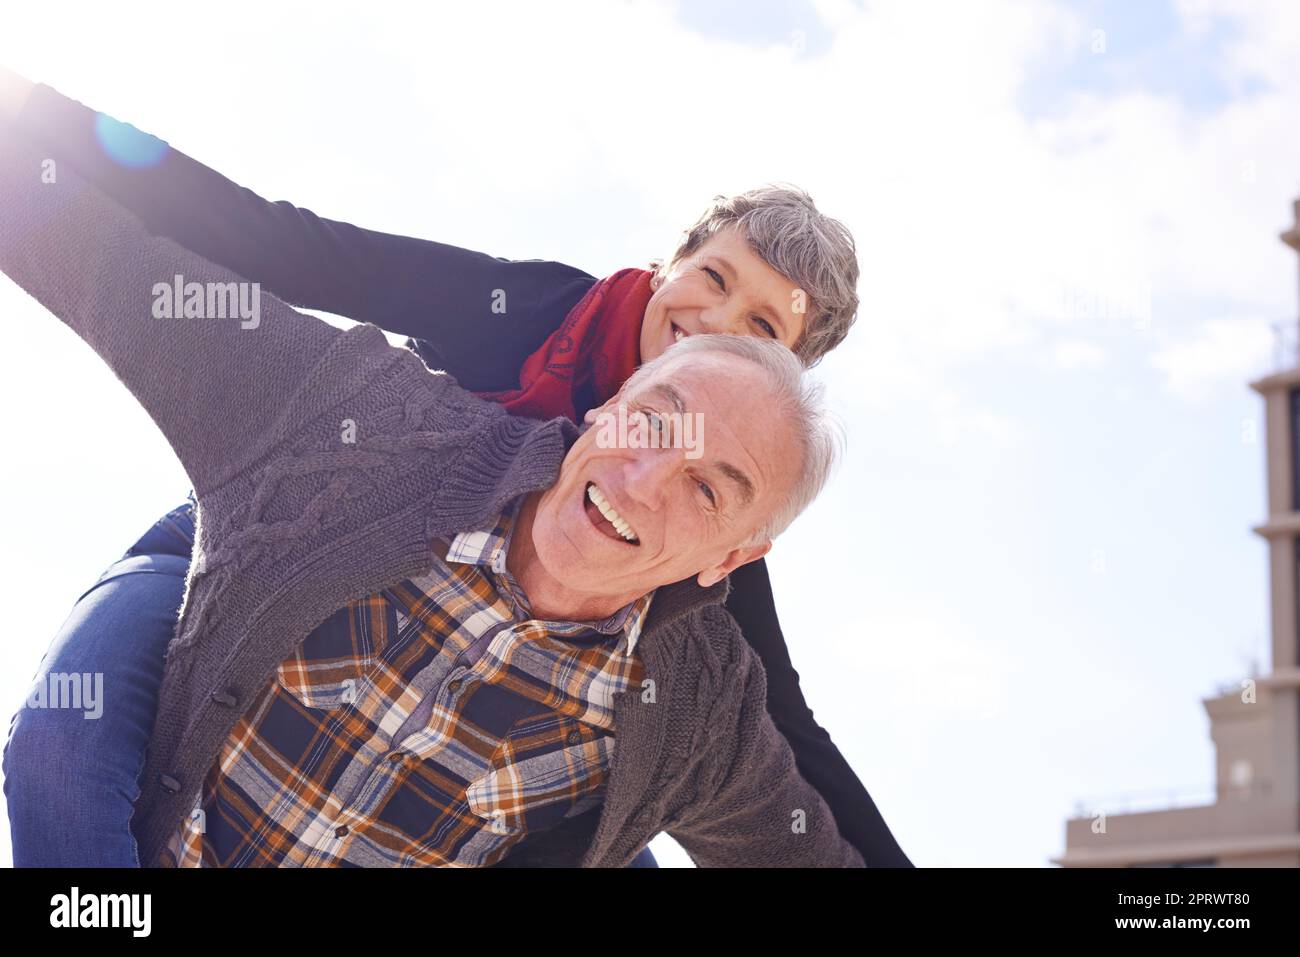 Never stop having fun. Portrait of a happy senior couple enjoying a piggyback ride outdoors. Stock Photo